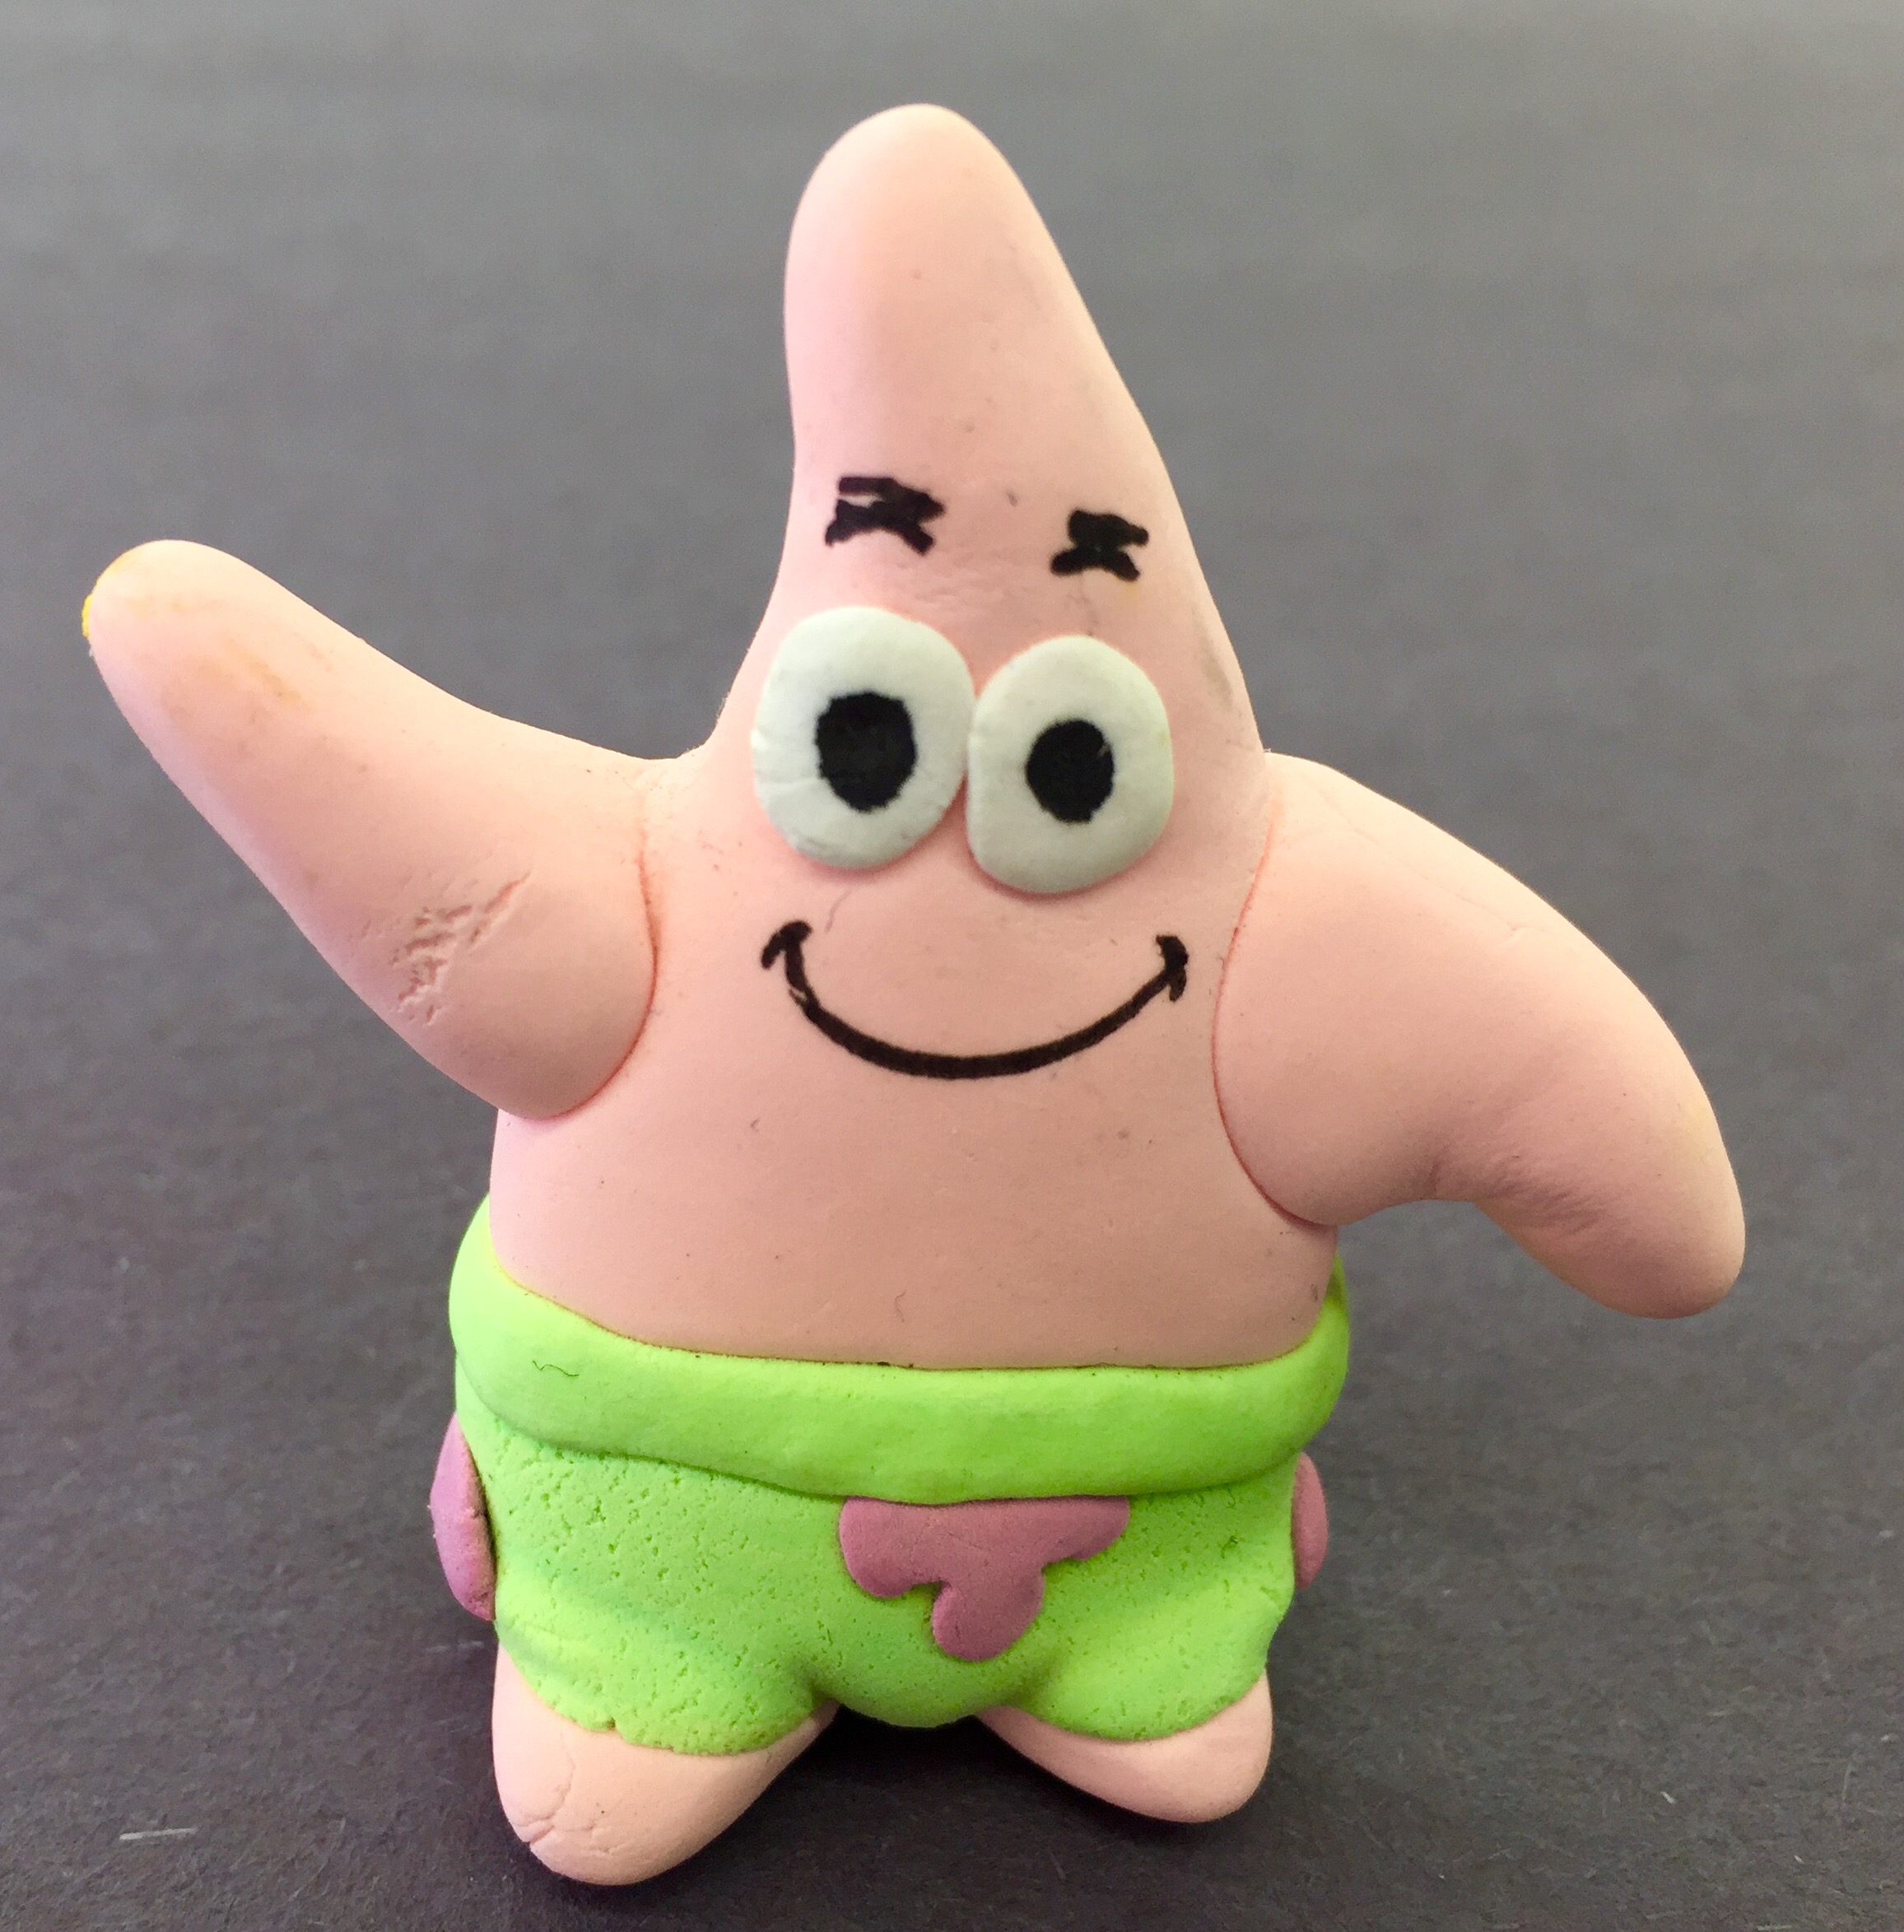 Patrick.jpg